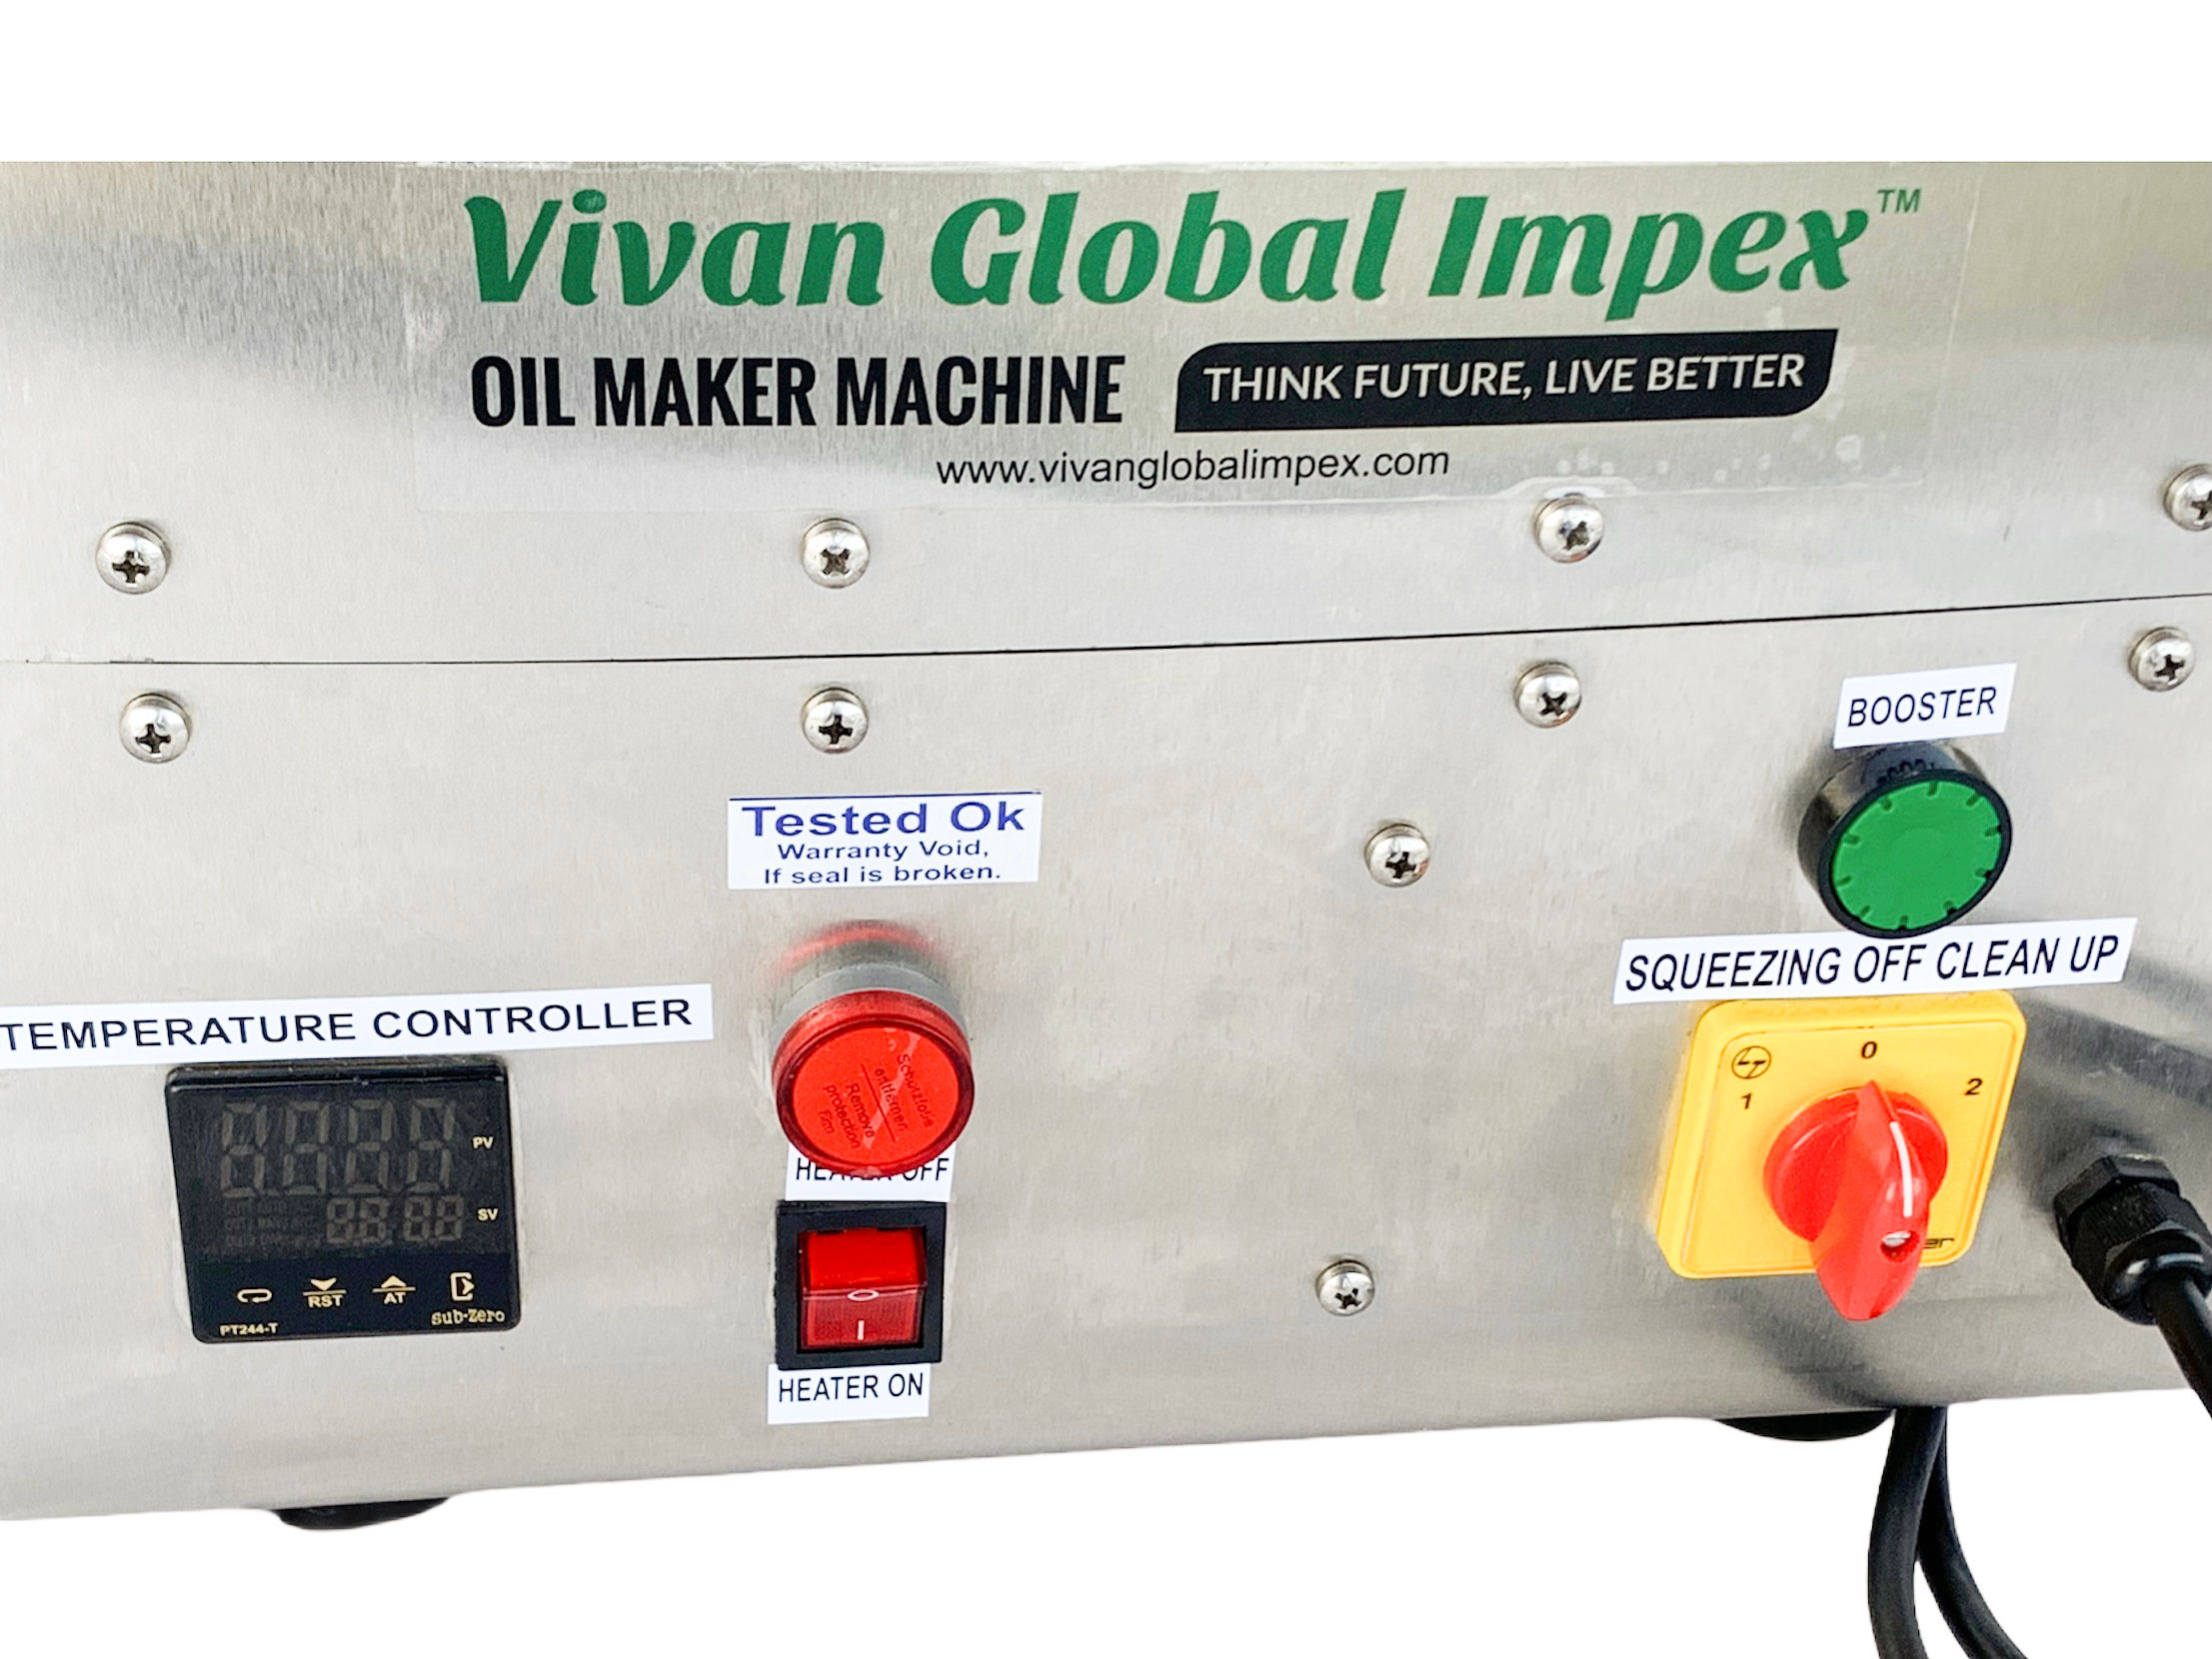 BUSINESS USE MINI COMMERCIAL OIL MAKER MACHINE